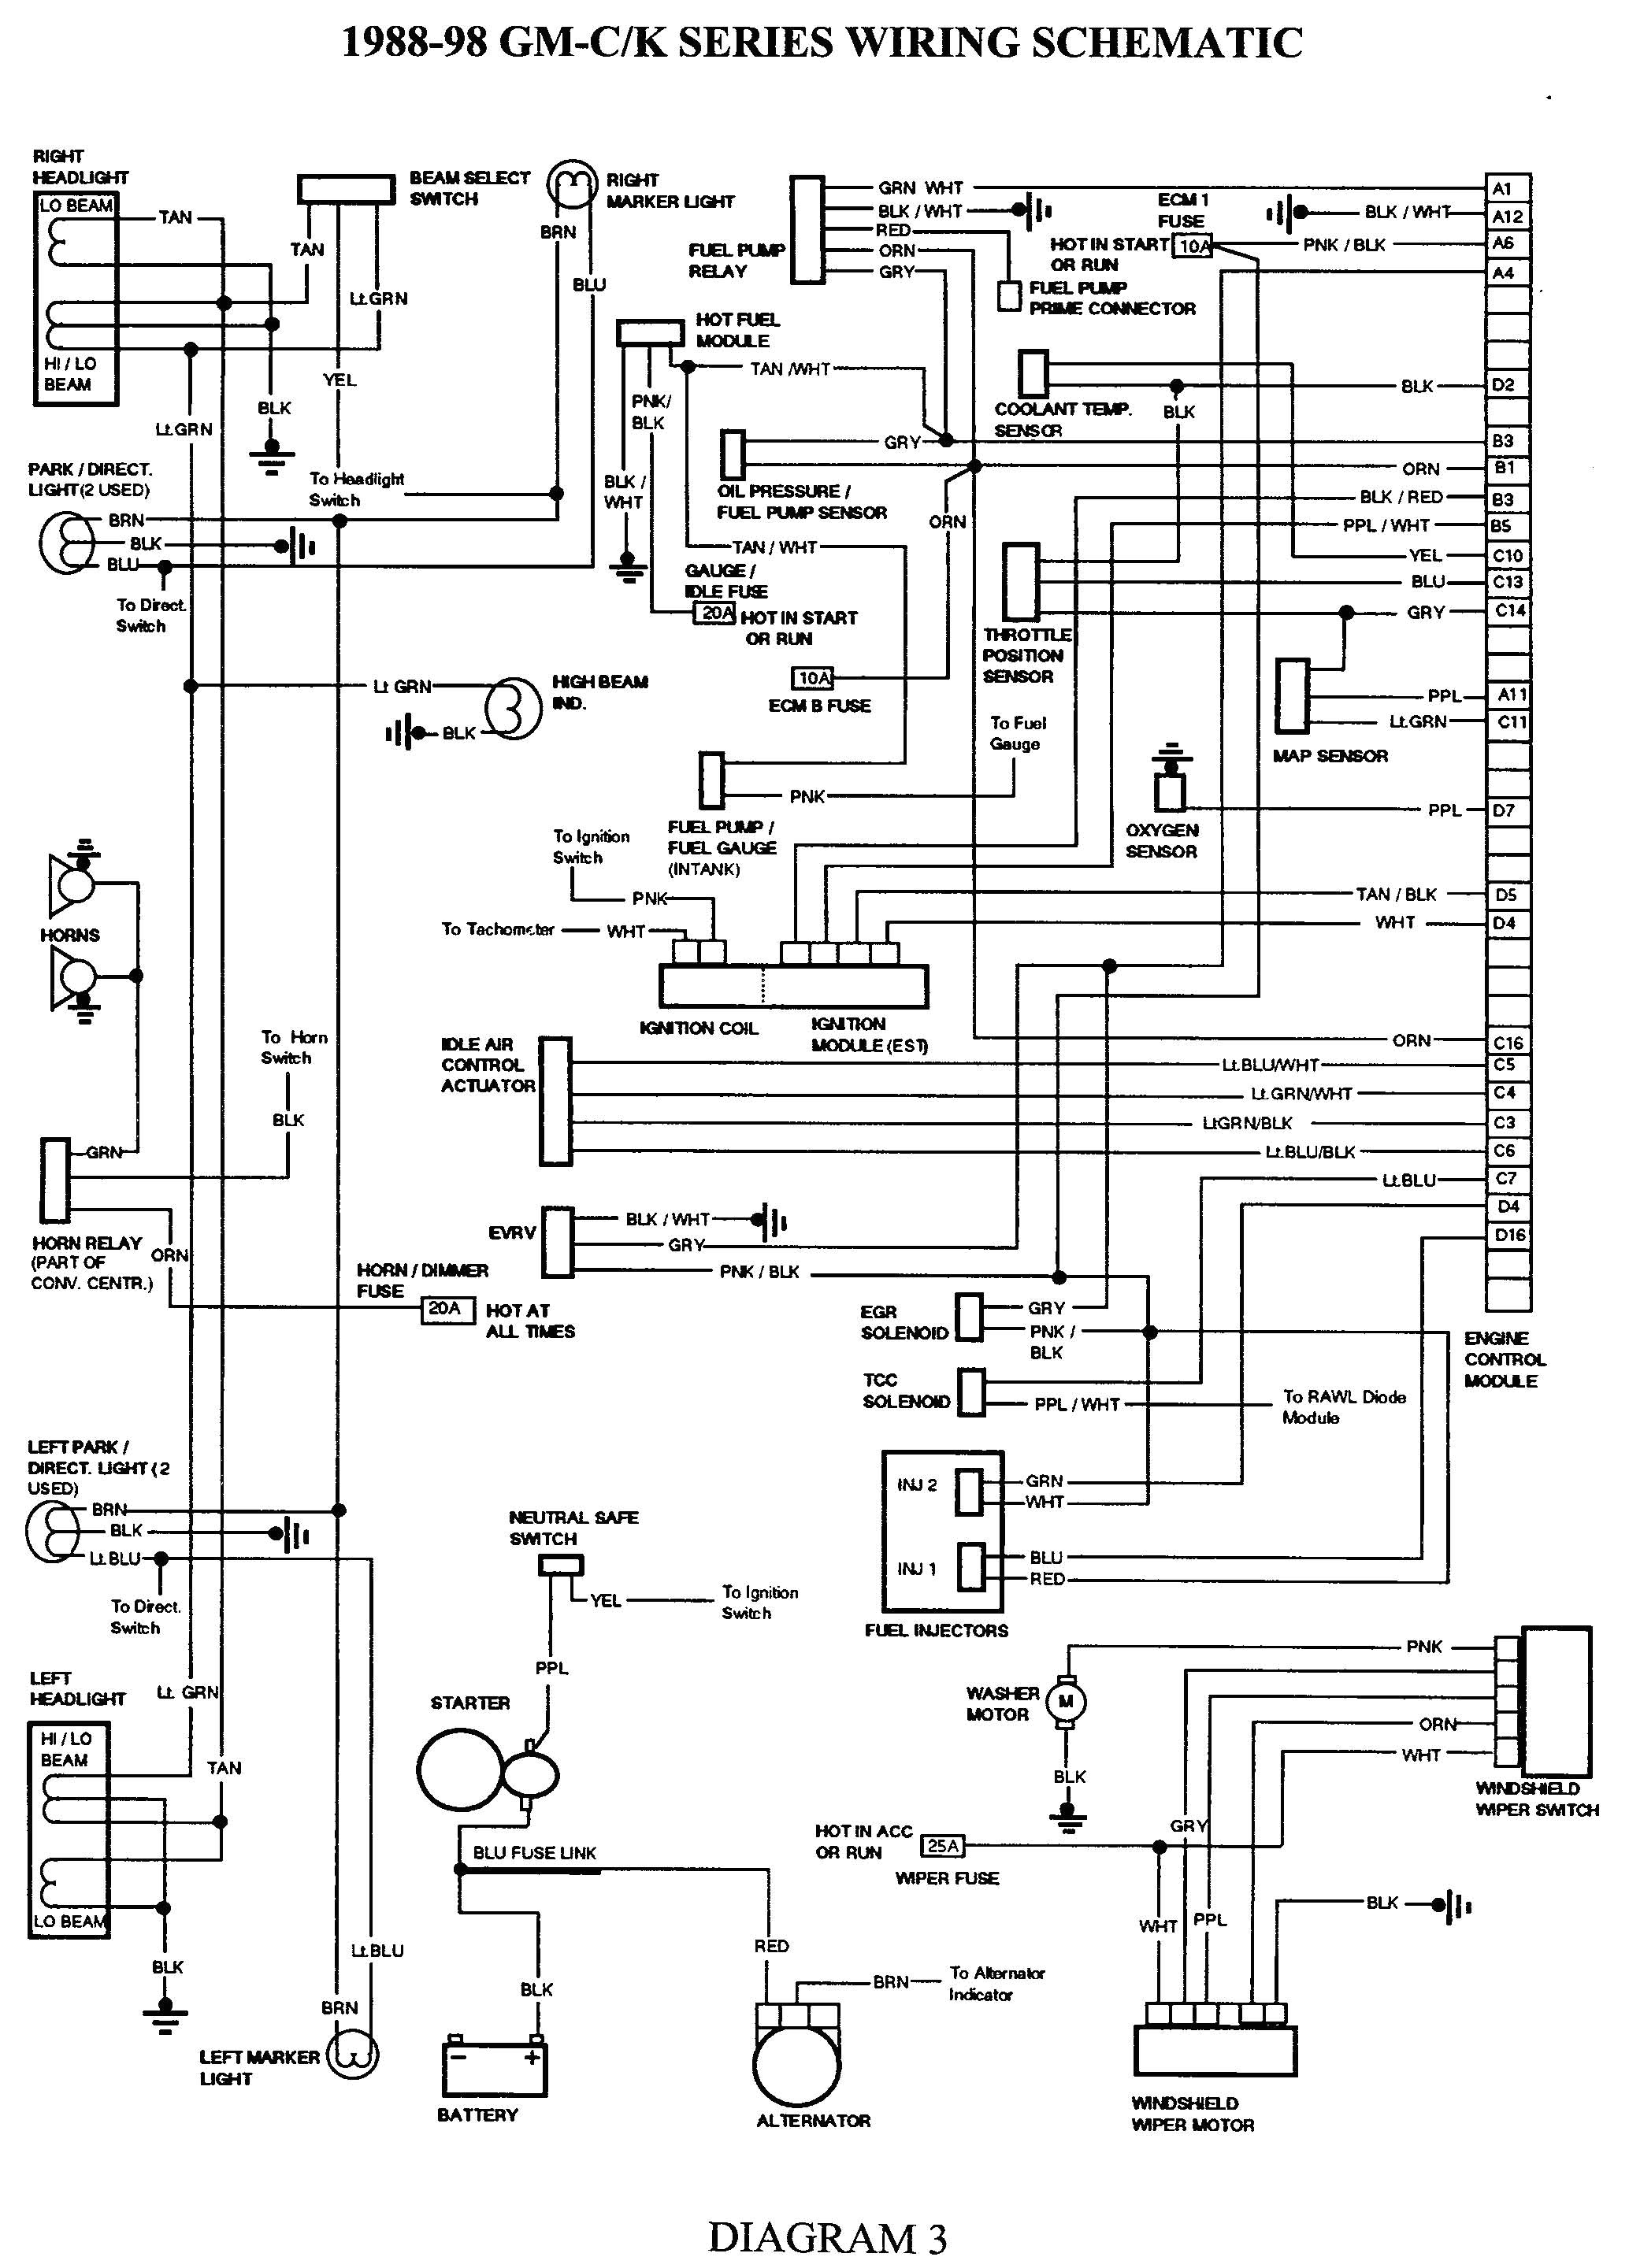 fuse box 1990 chevy truck wiring diagram datasource 1990 c1500 v8 wiring diagram